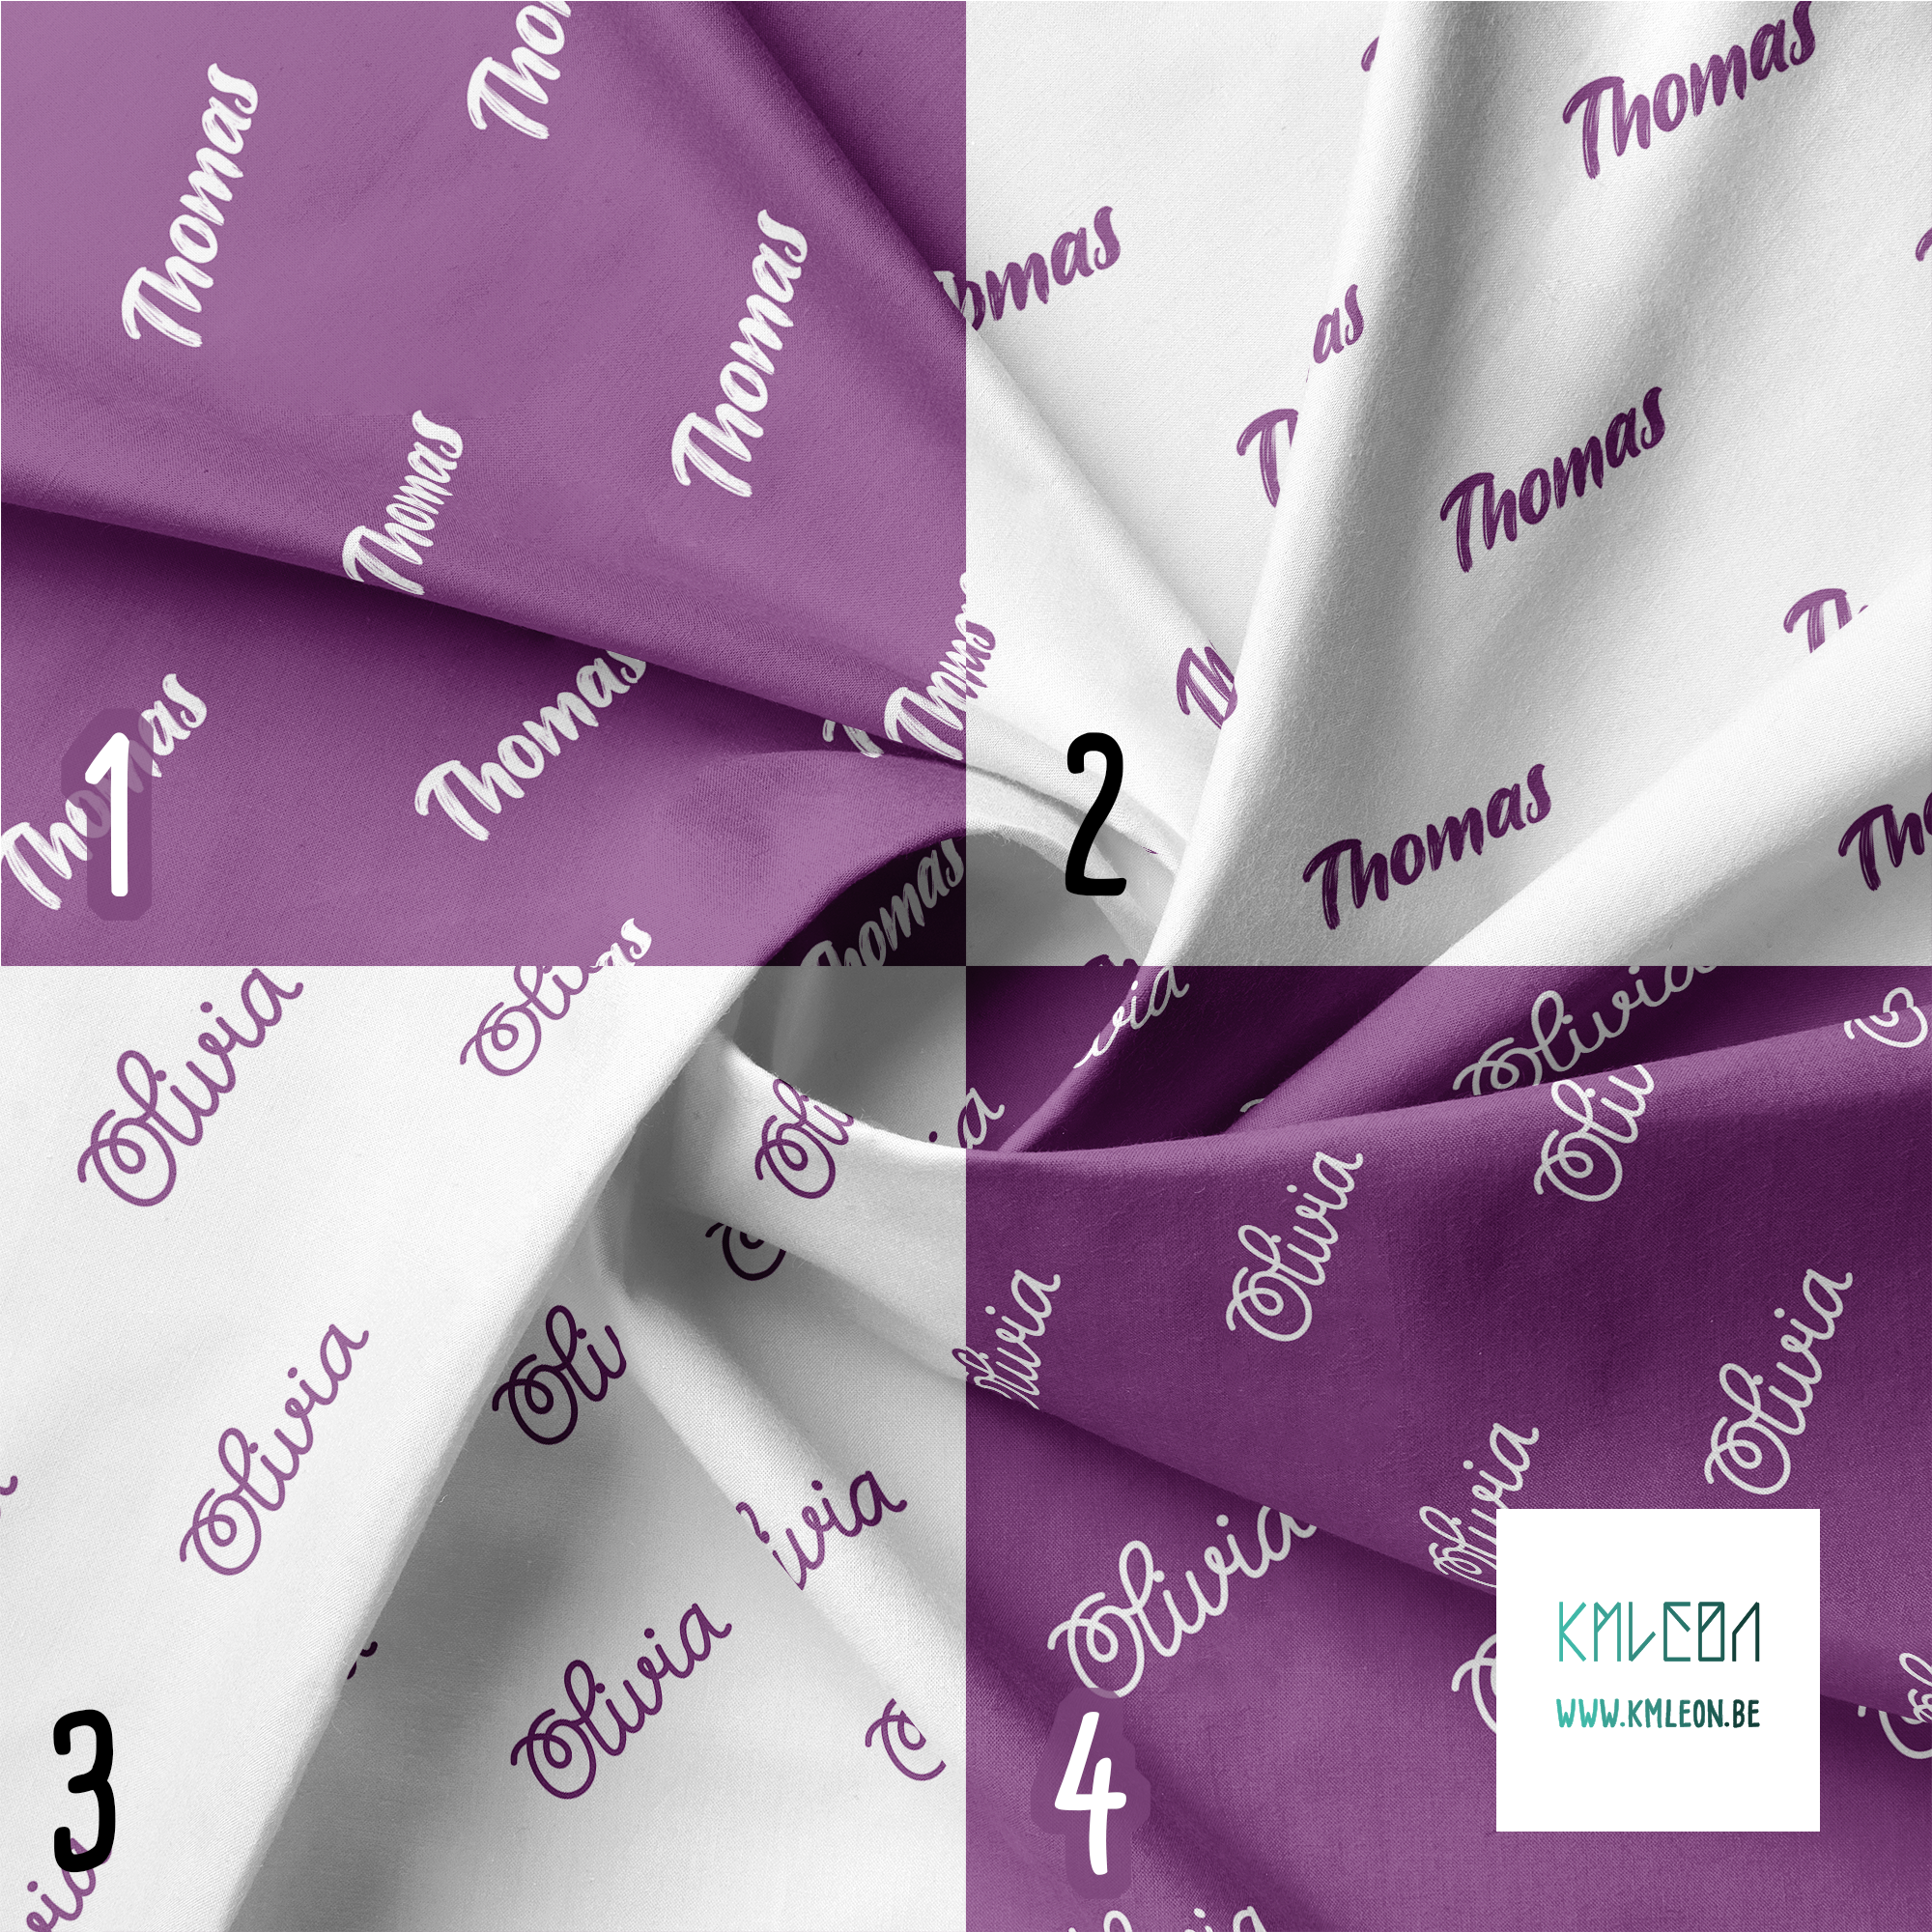 Personalised fabric in mauve purple